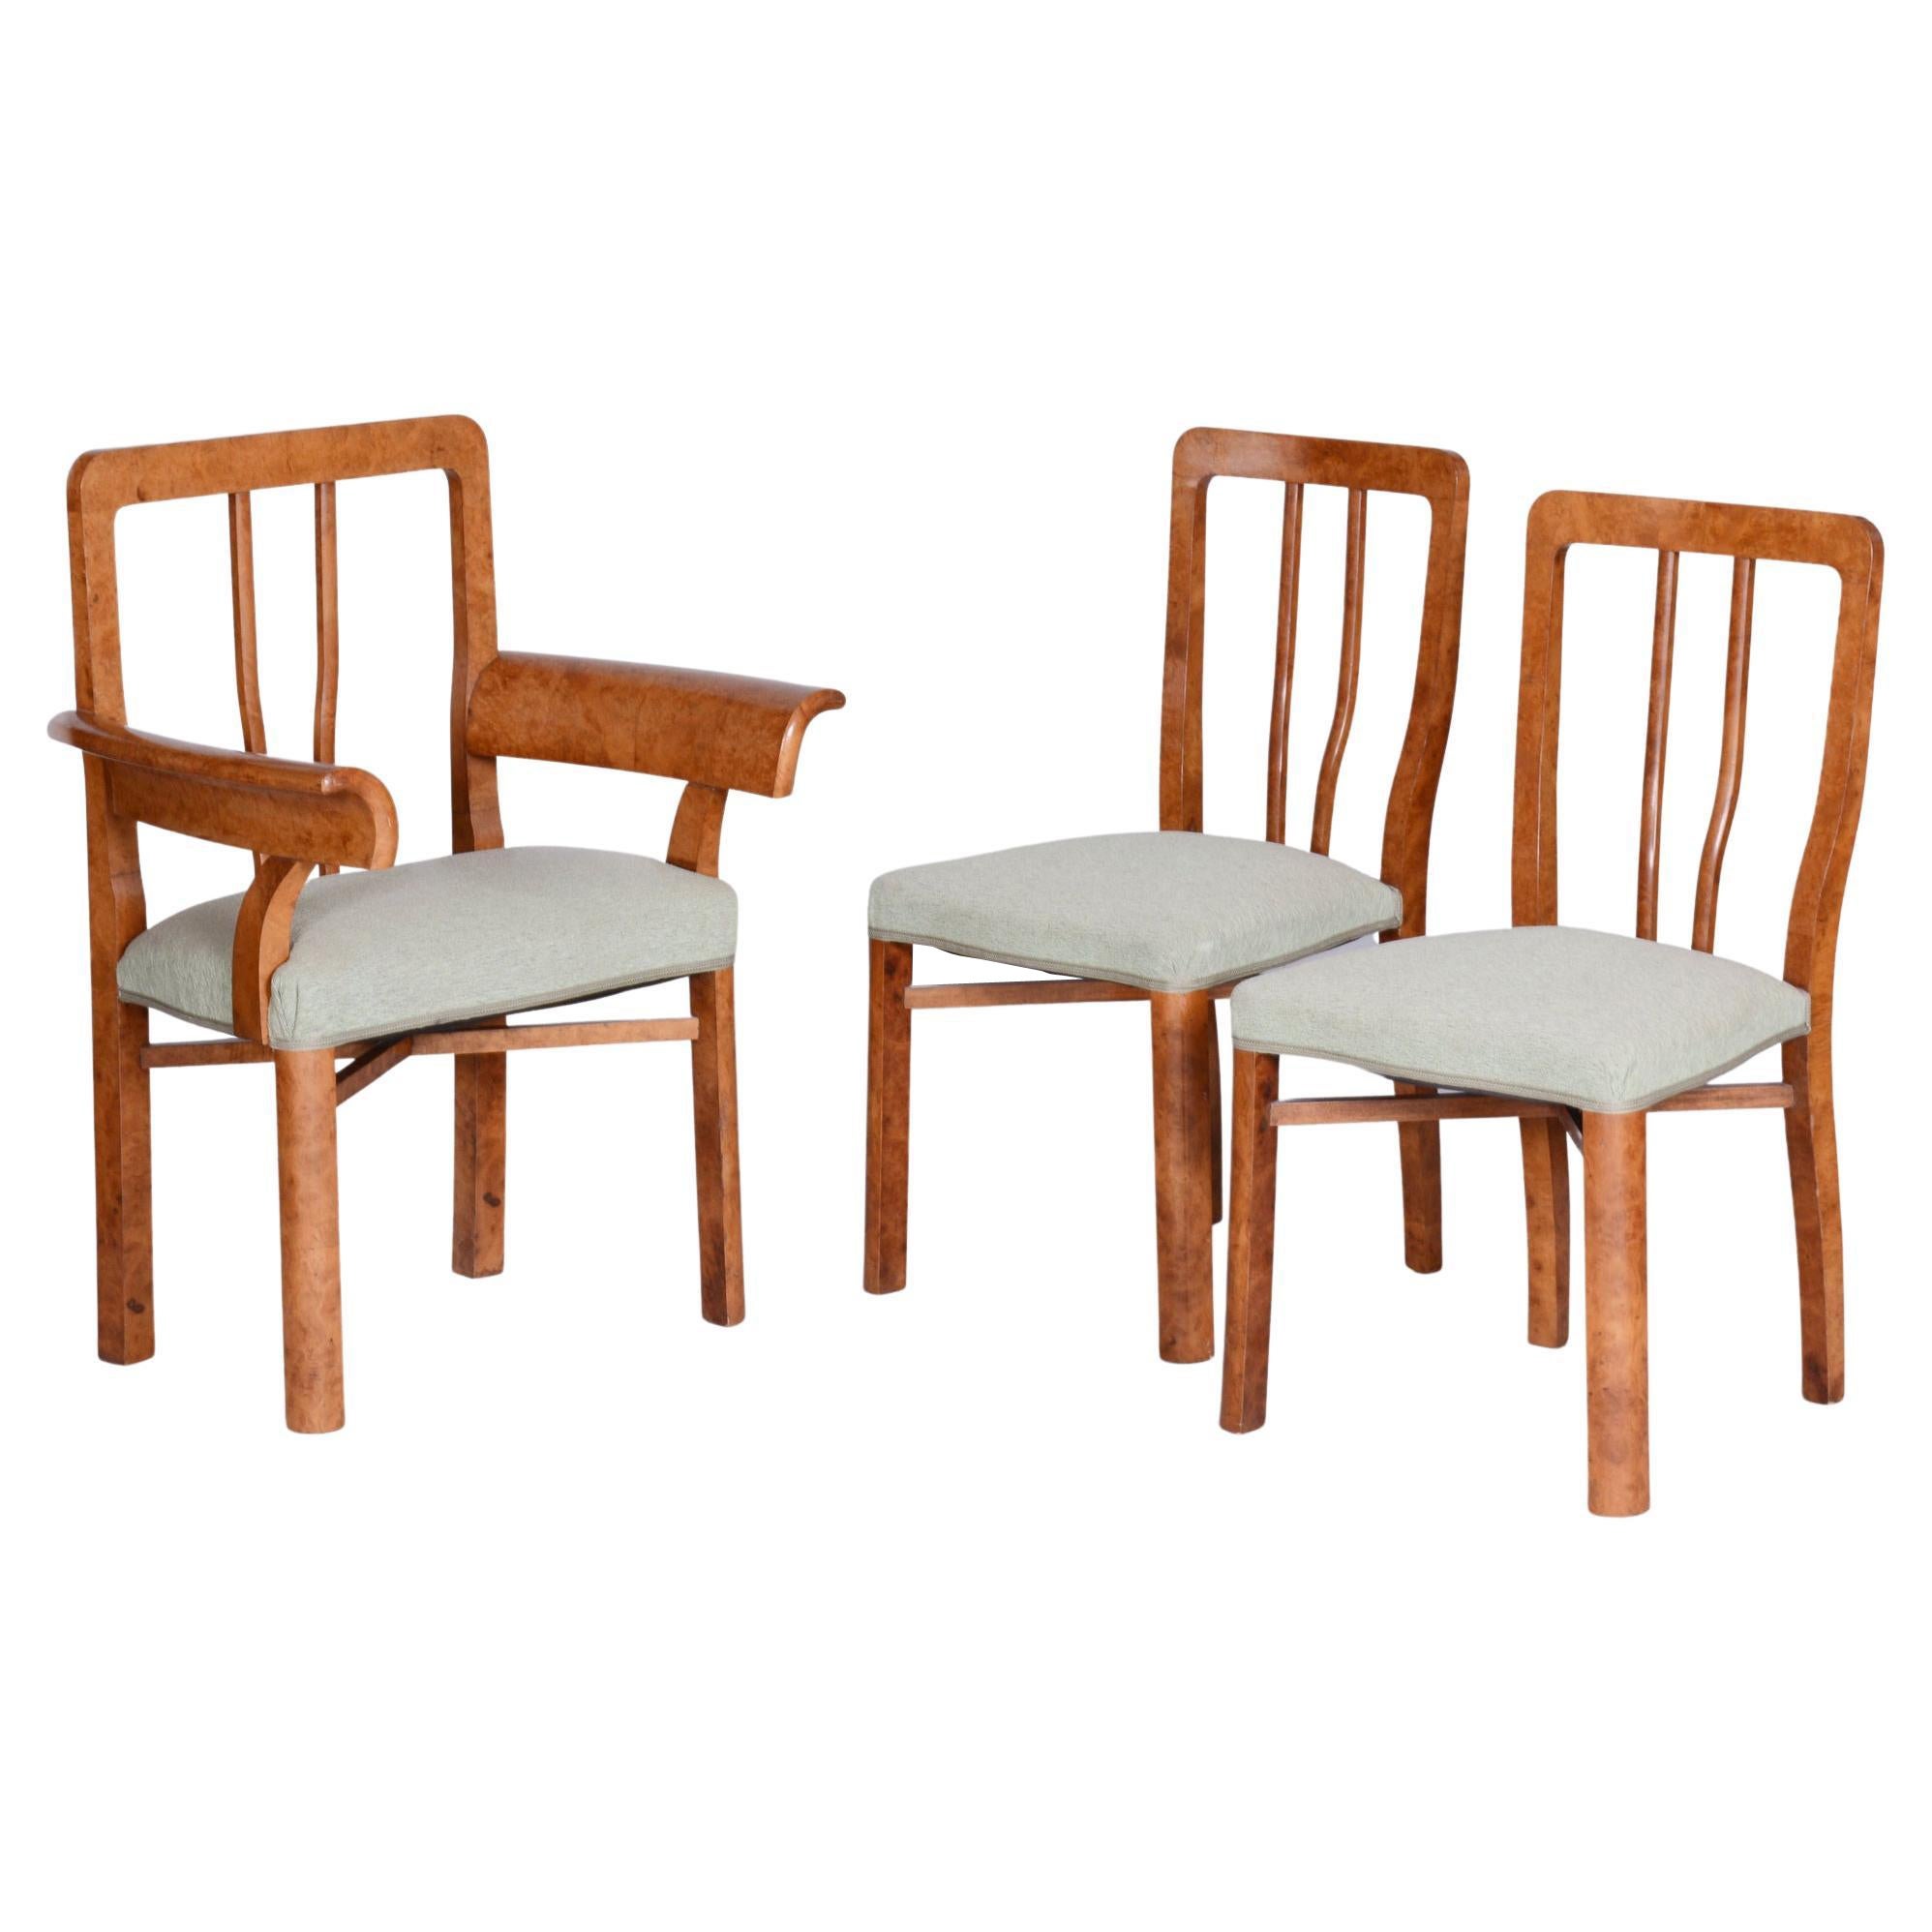 Restored ArtDeco Seating Set, Beech, Maple Root Veneer, Czechia, 1930s For Sale